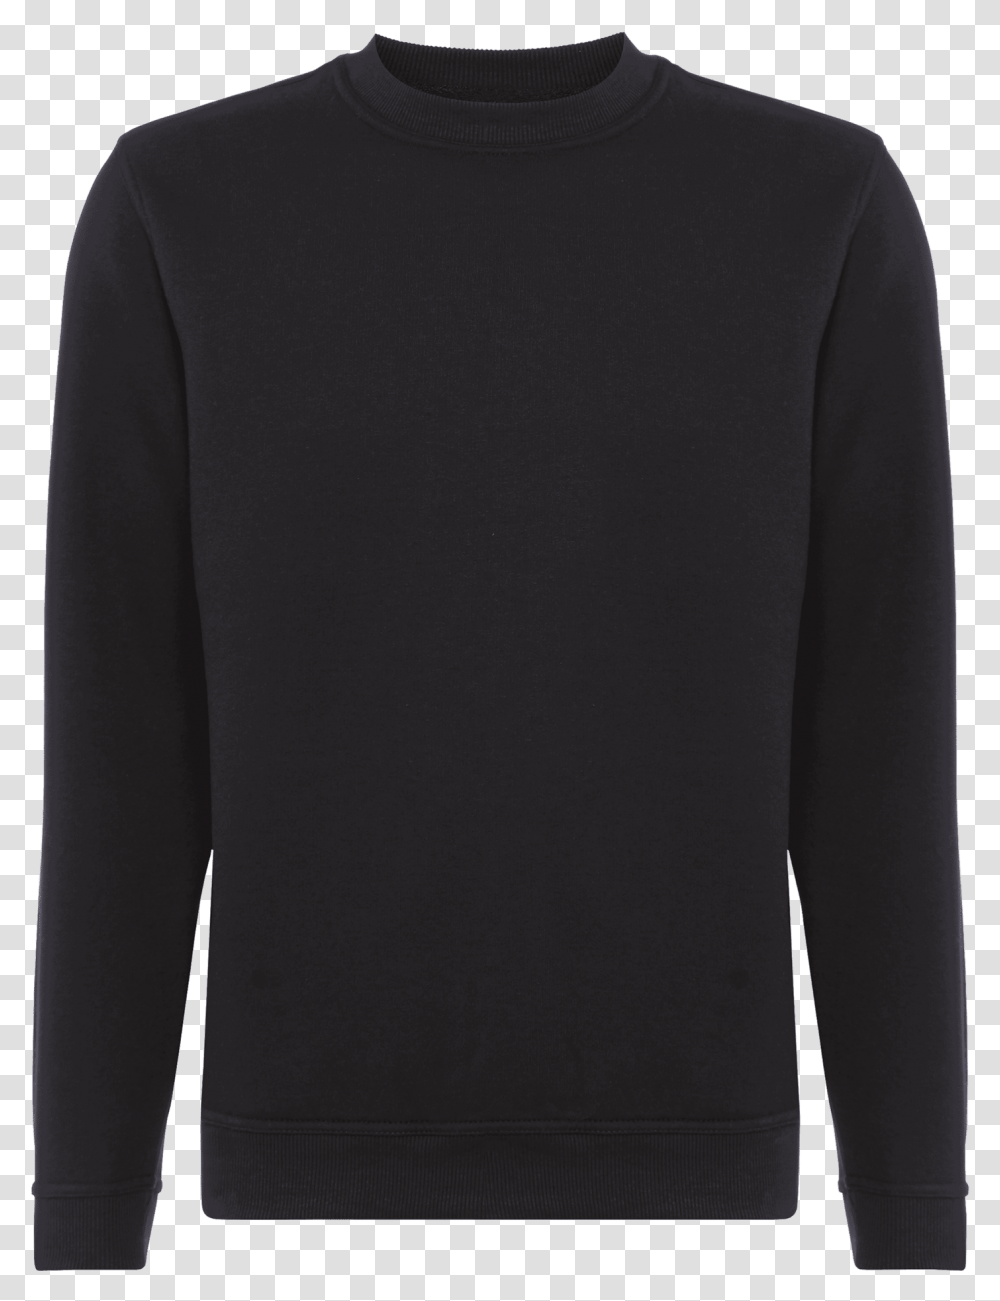 Classic Sweatshirt Sweatshirts Amp Hoodies School Plain Black Cardigan, Sleeve, Apparel, Long Sleeve Transparent Png